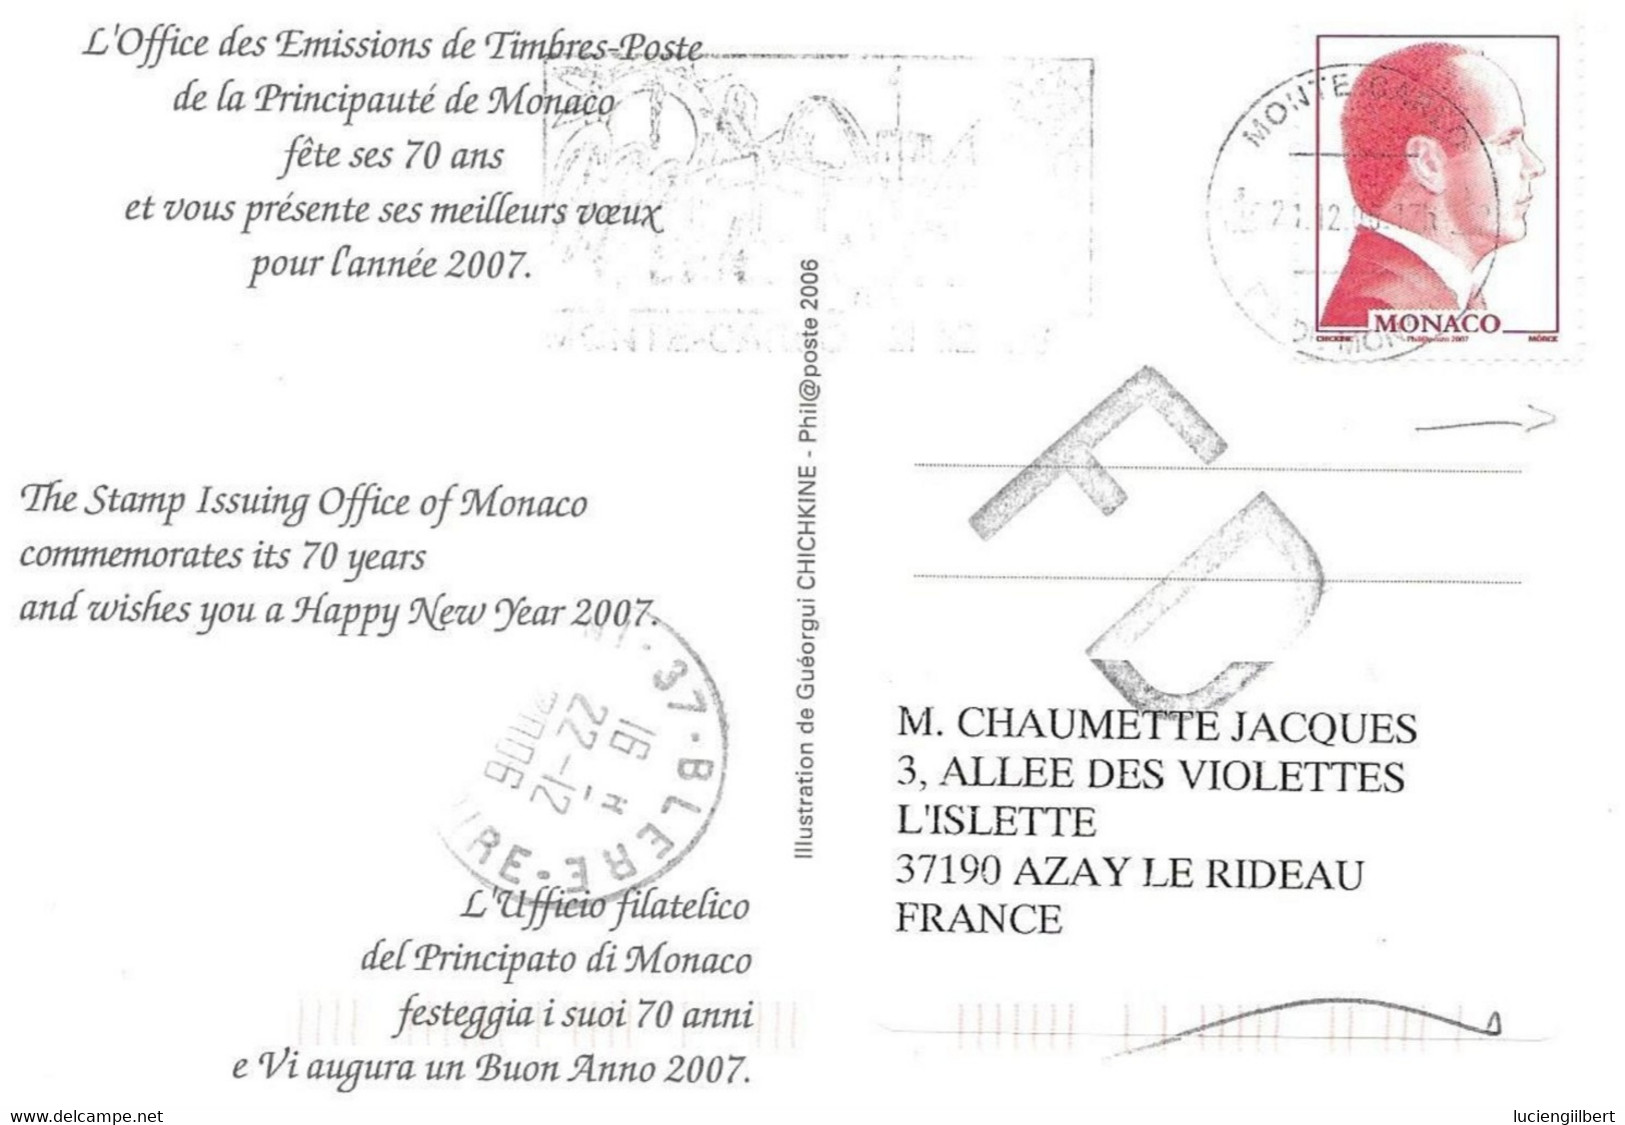 MONACO  -   MONTE CARLO  -   TIMBRE N° 2562 -   TARIF DU 1 10 06 AU 28 2 08 -  -  2006 - GRAVURE S.A.S. PRINCE ALBERT II - Covers & Documents